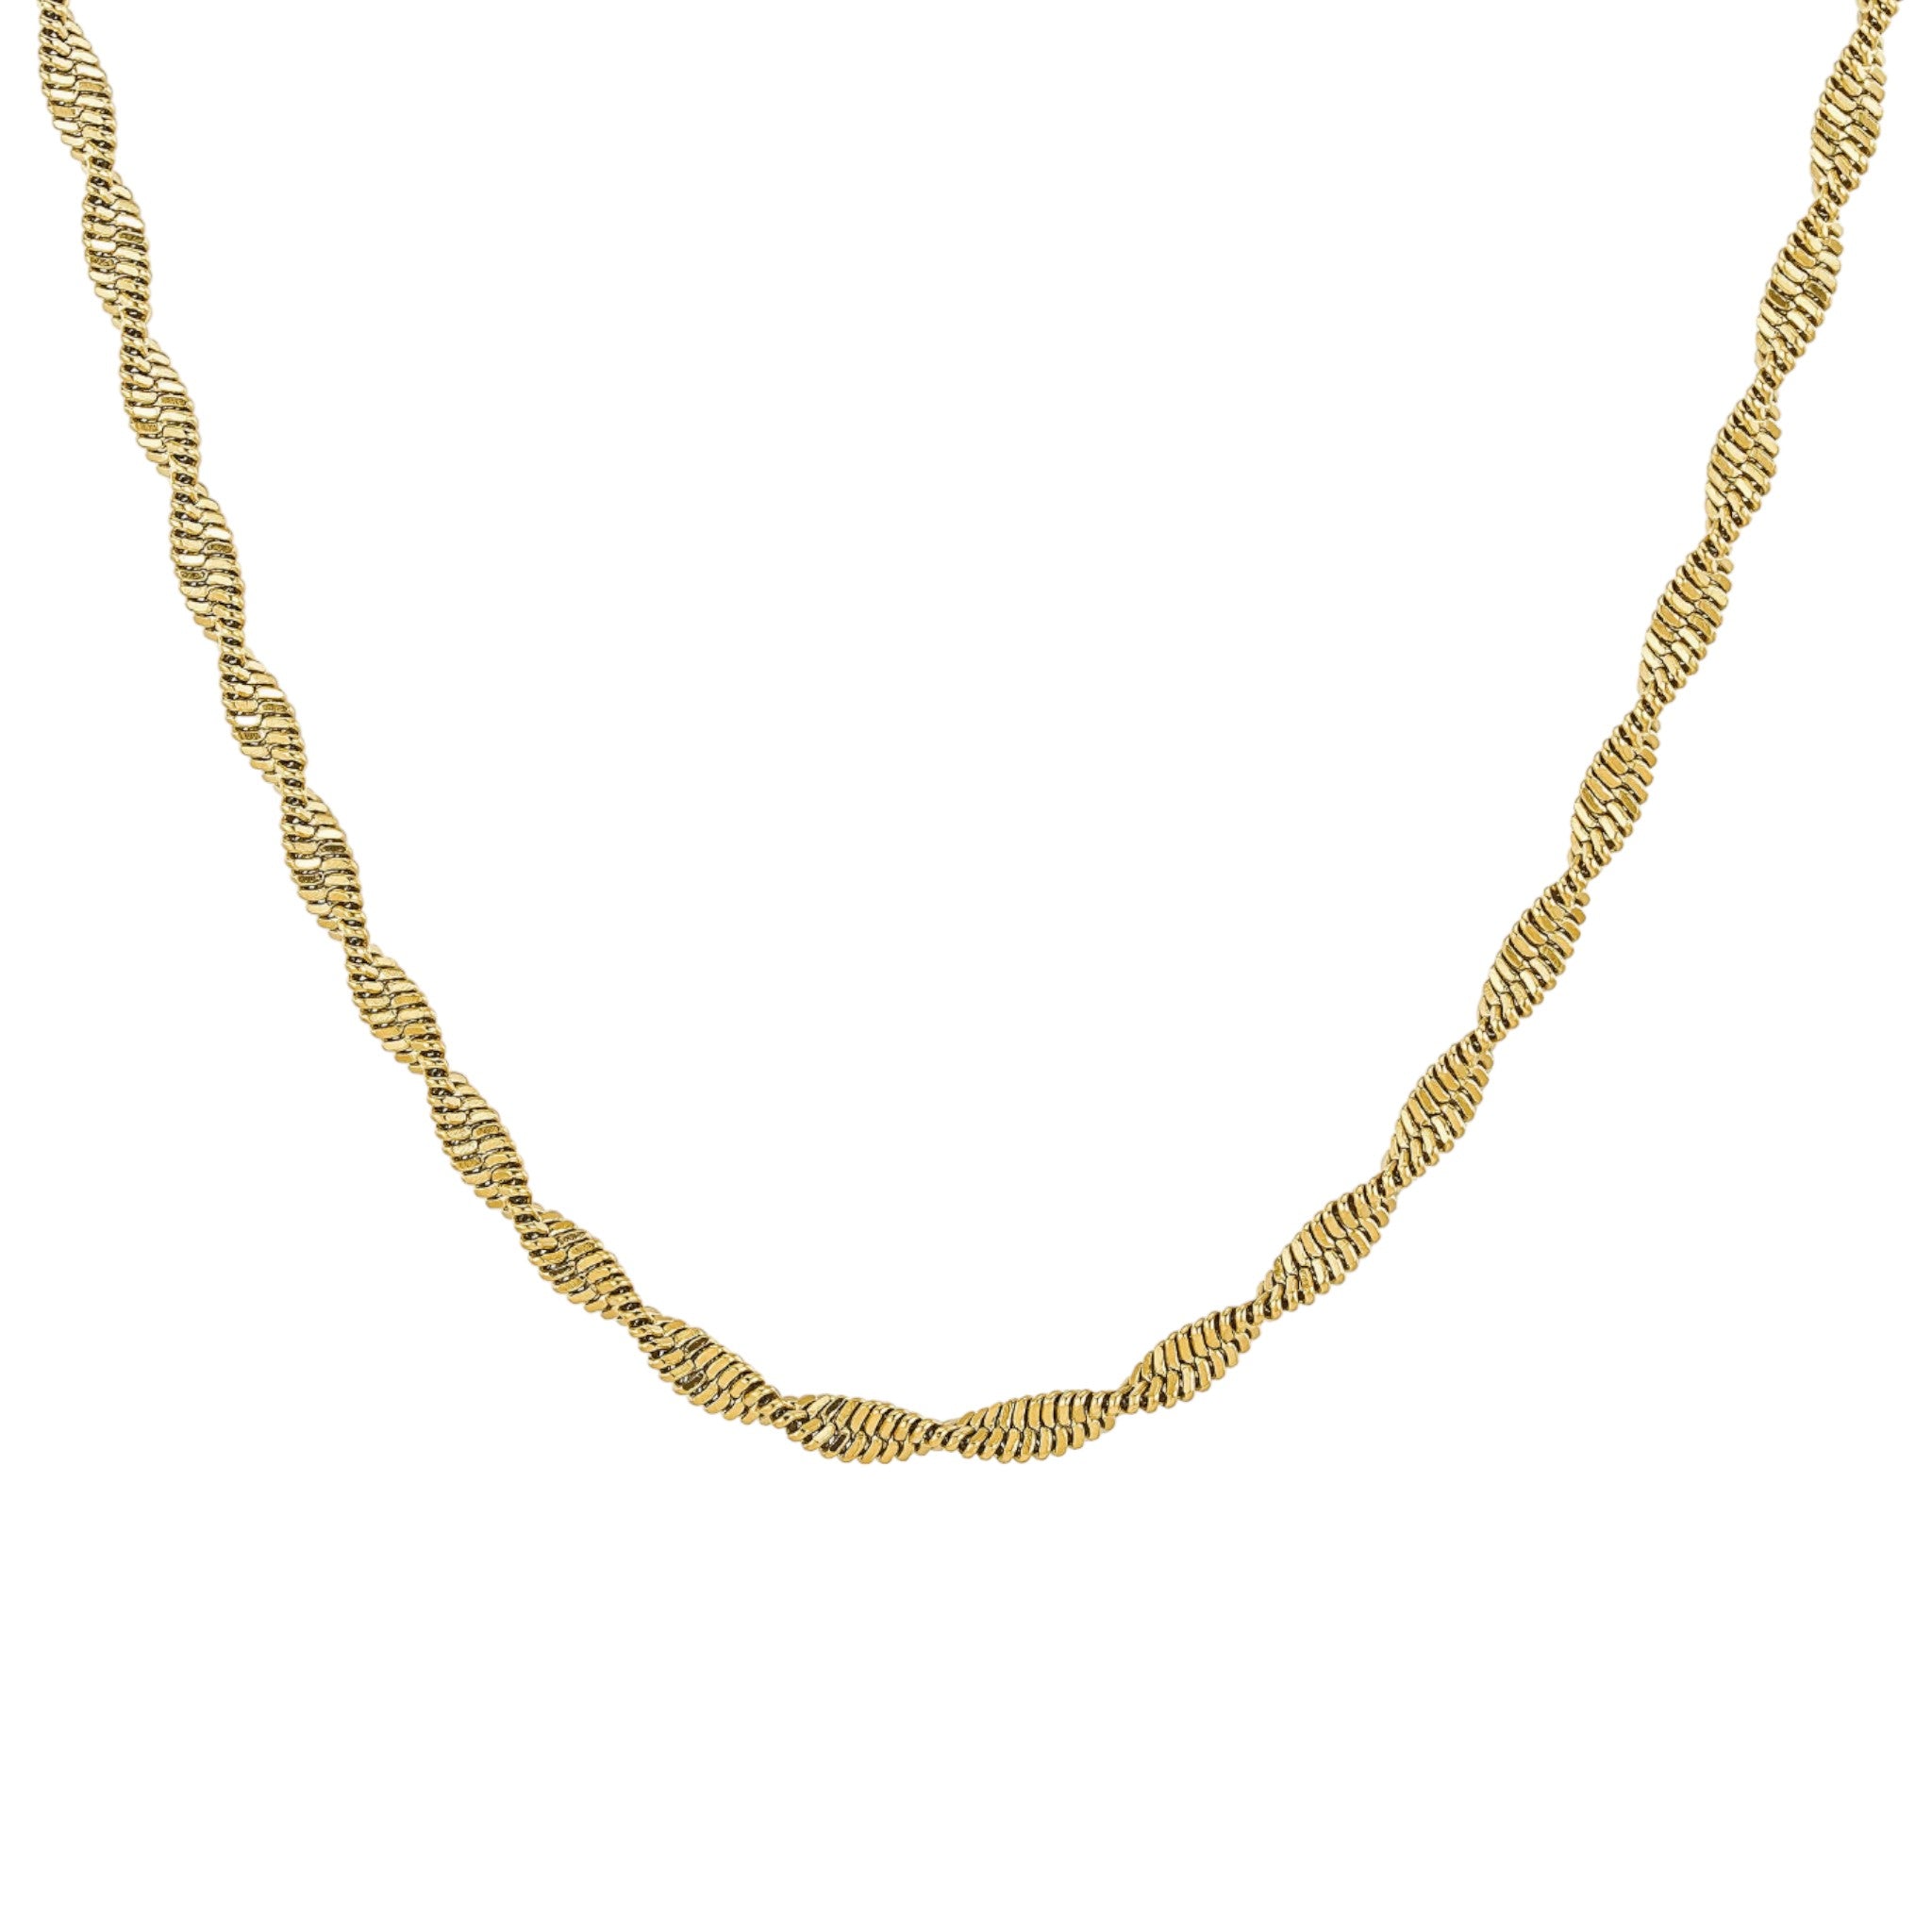 Mod + Jo - Brooke 16" Chain Necklace - Gold Plate